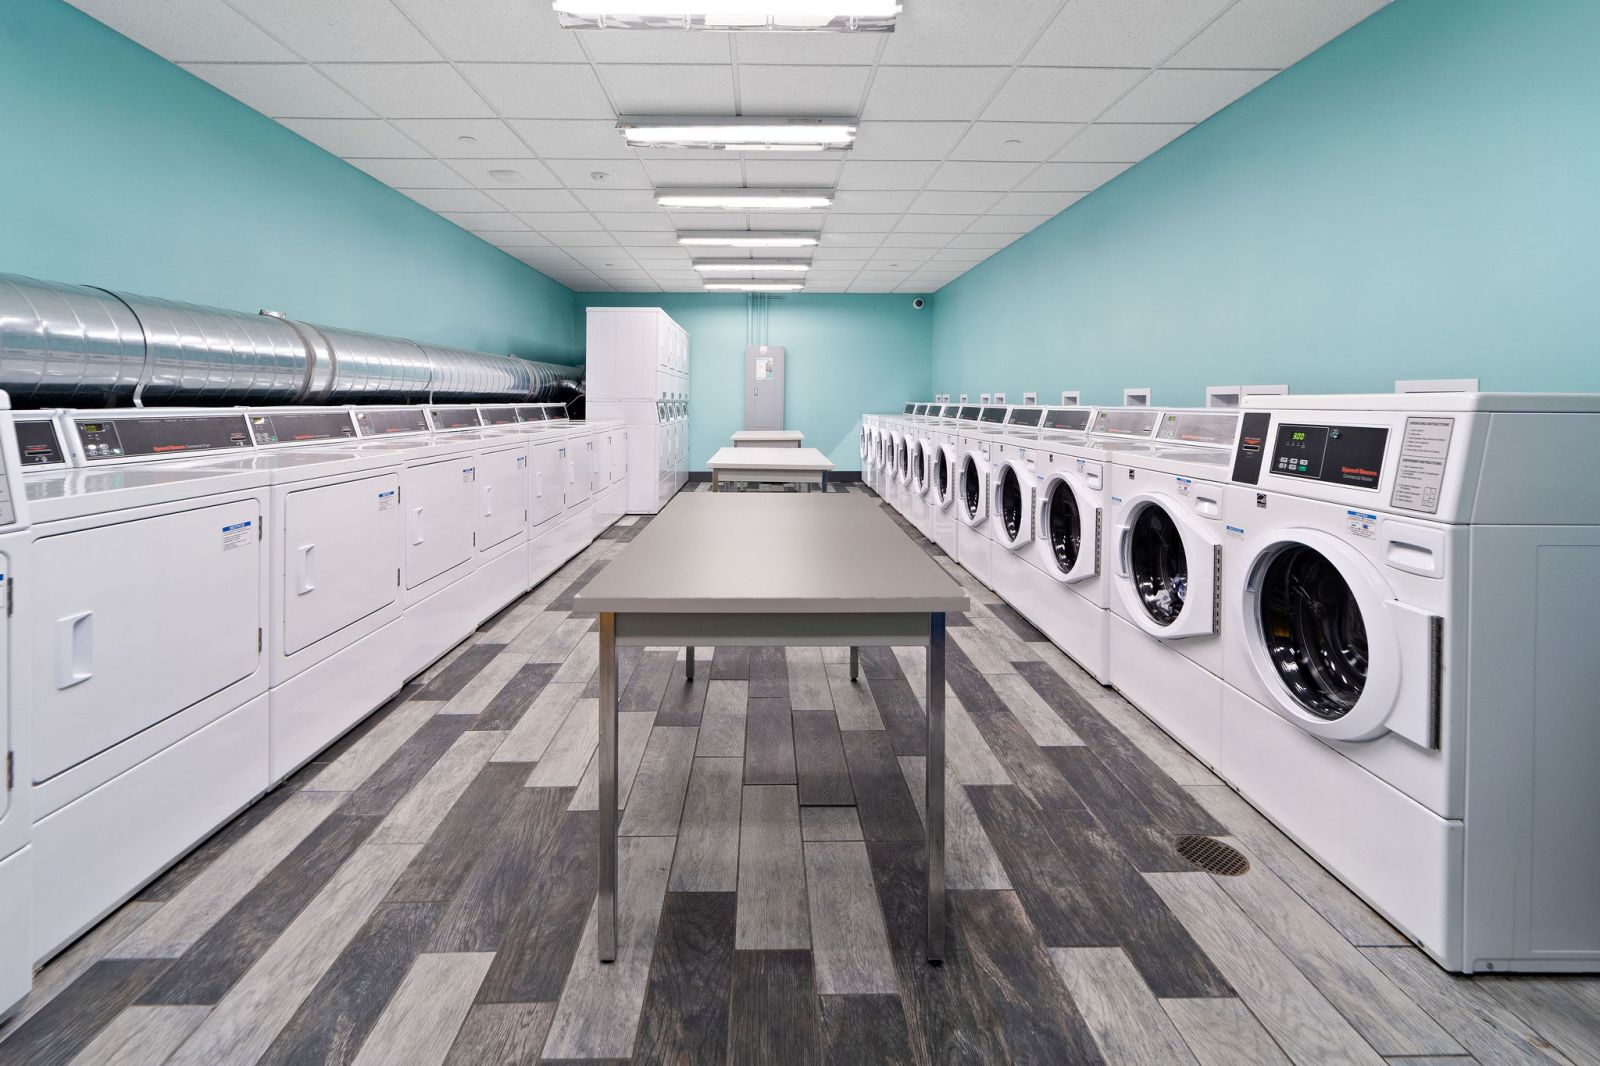 Laundry room off campus housing in Binghamton NY